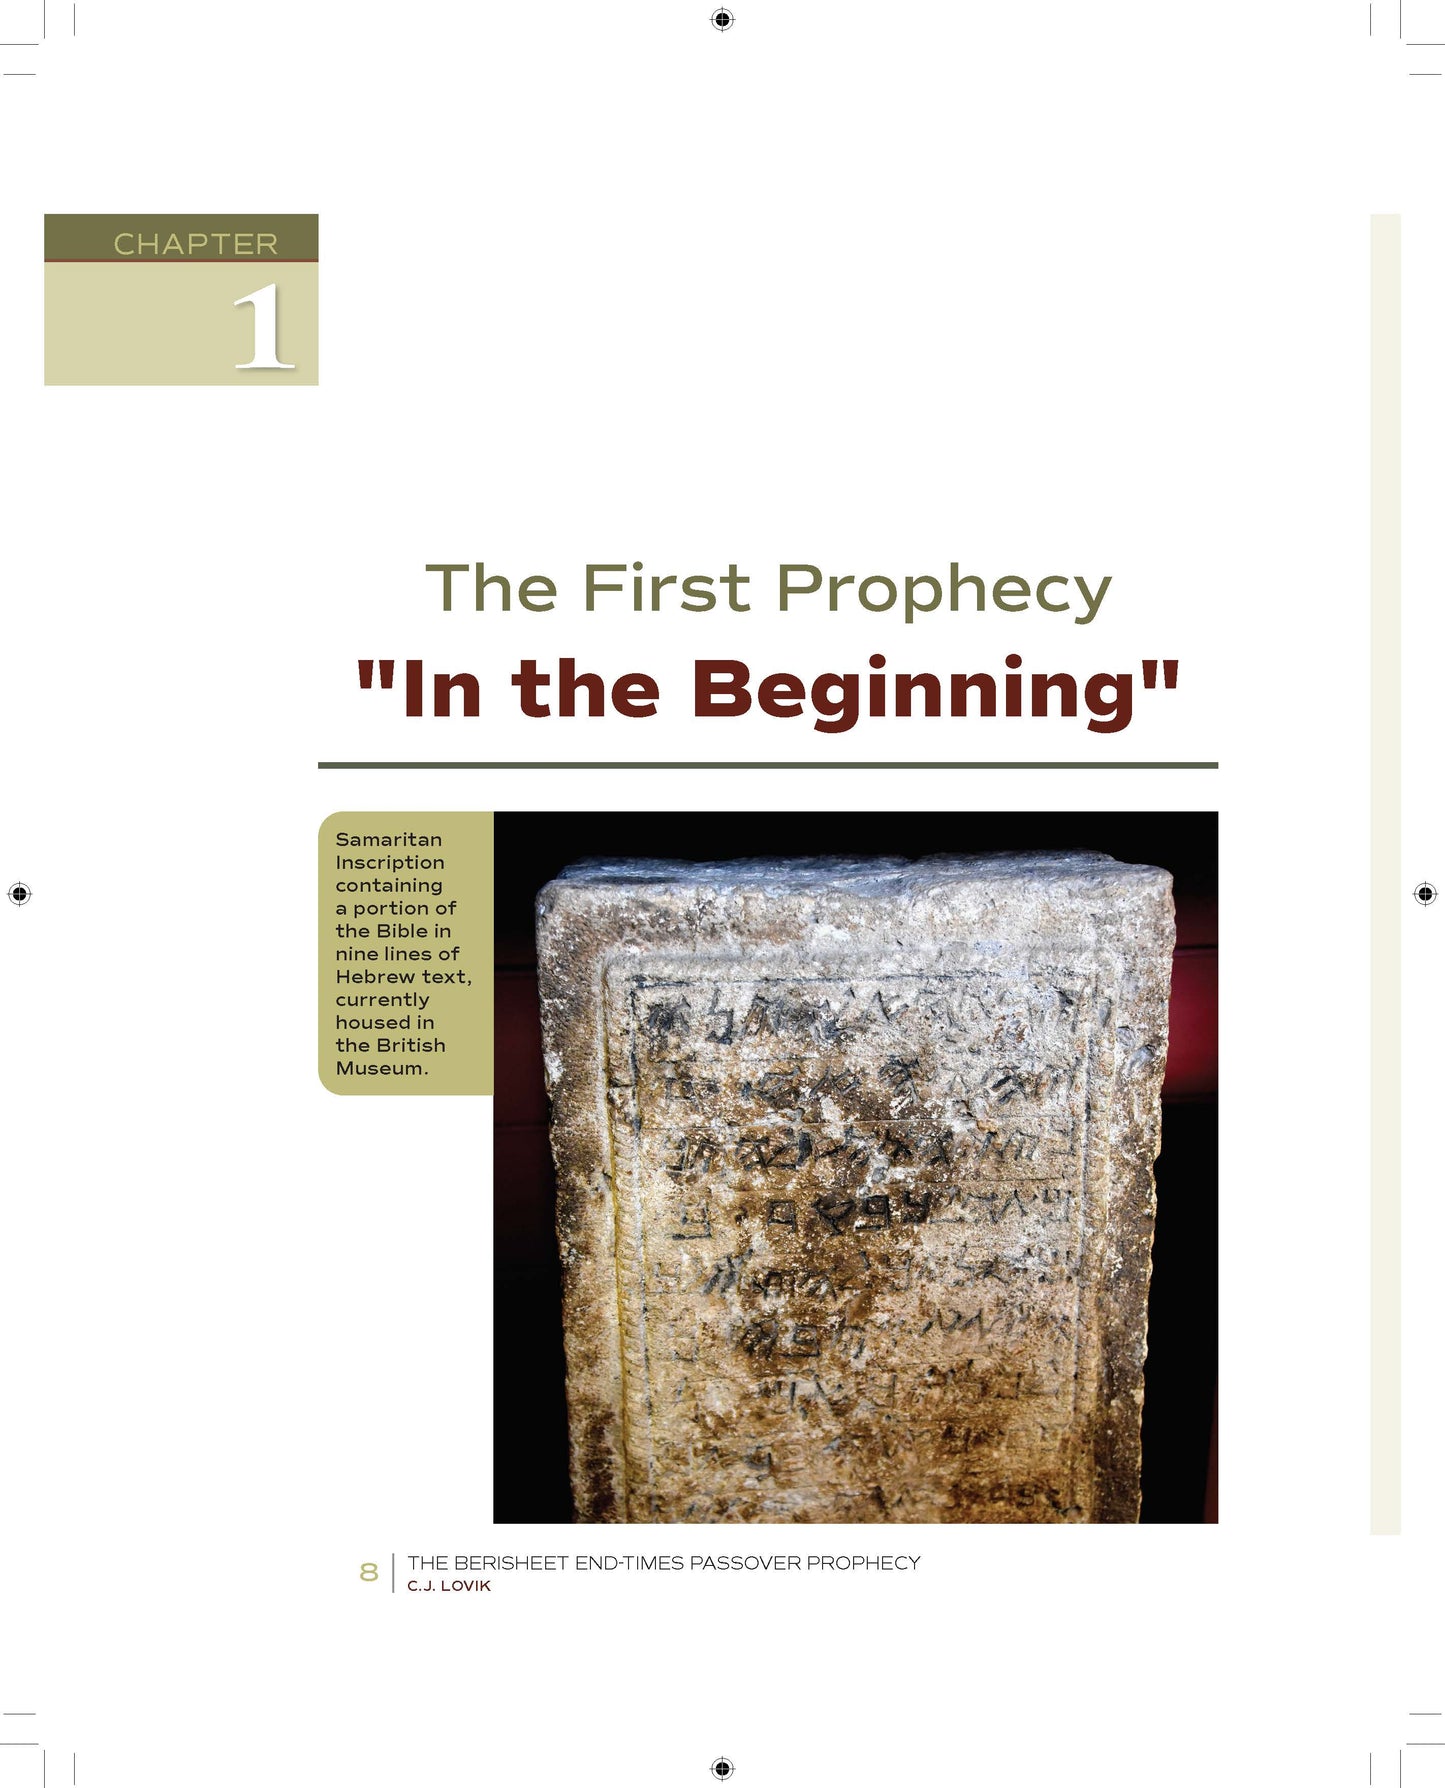 The Berisheet Passover Prophecy